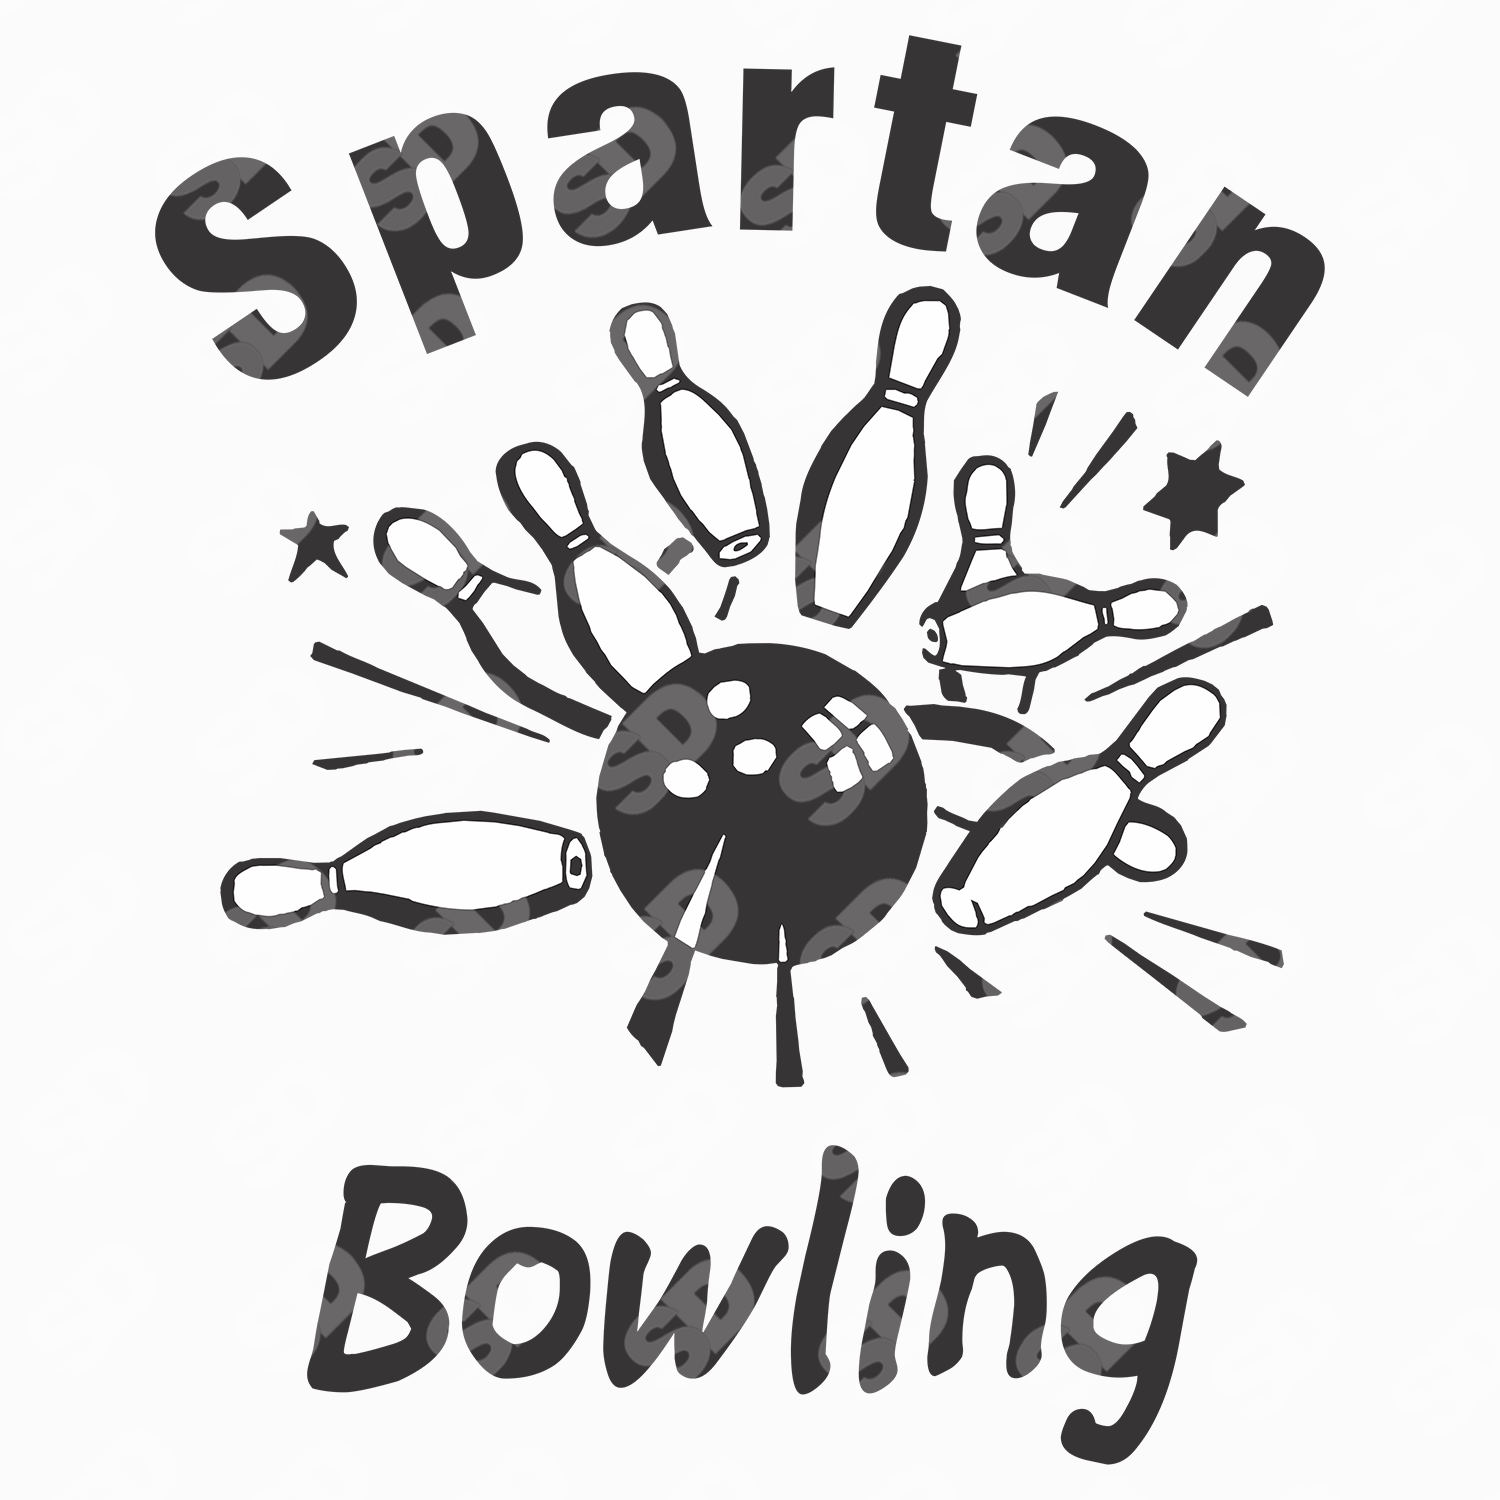 Bowling Template Design (197262)